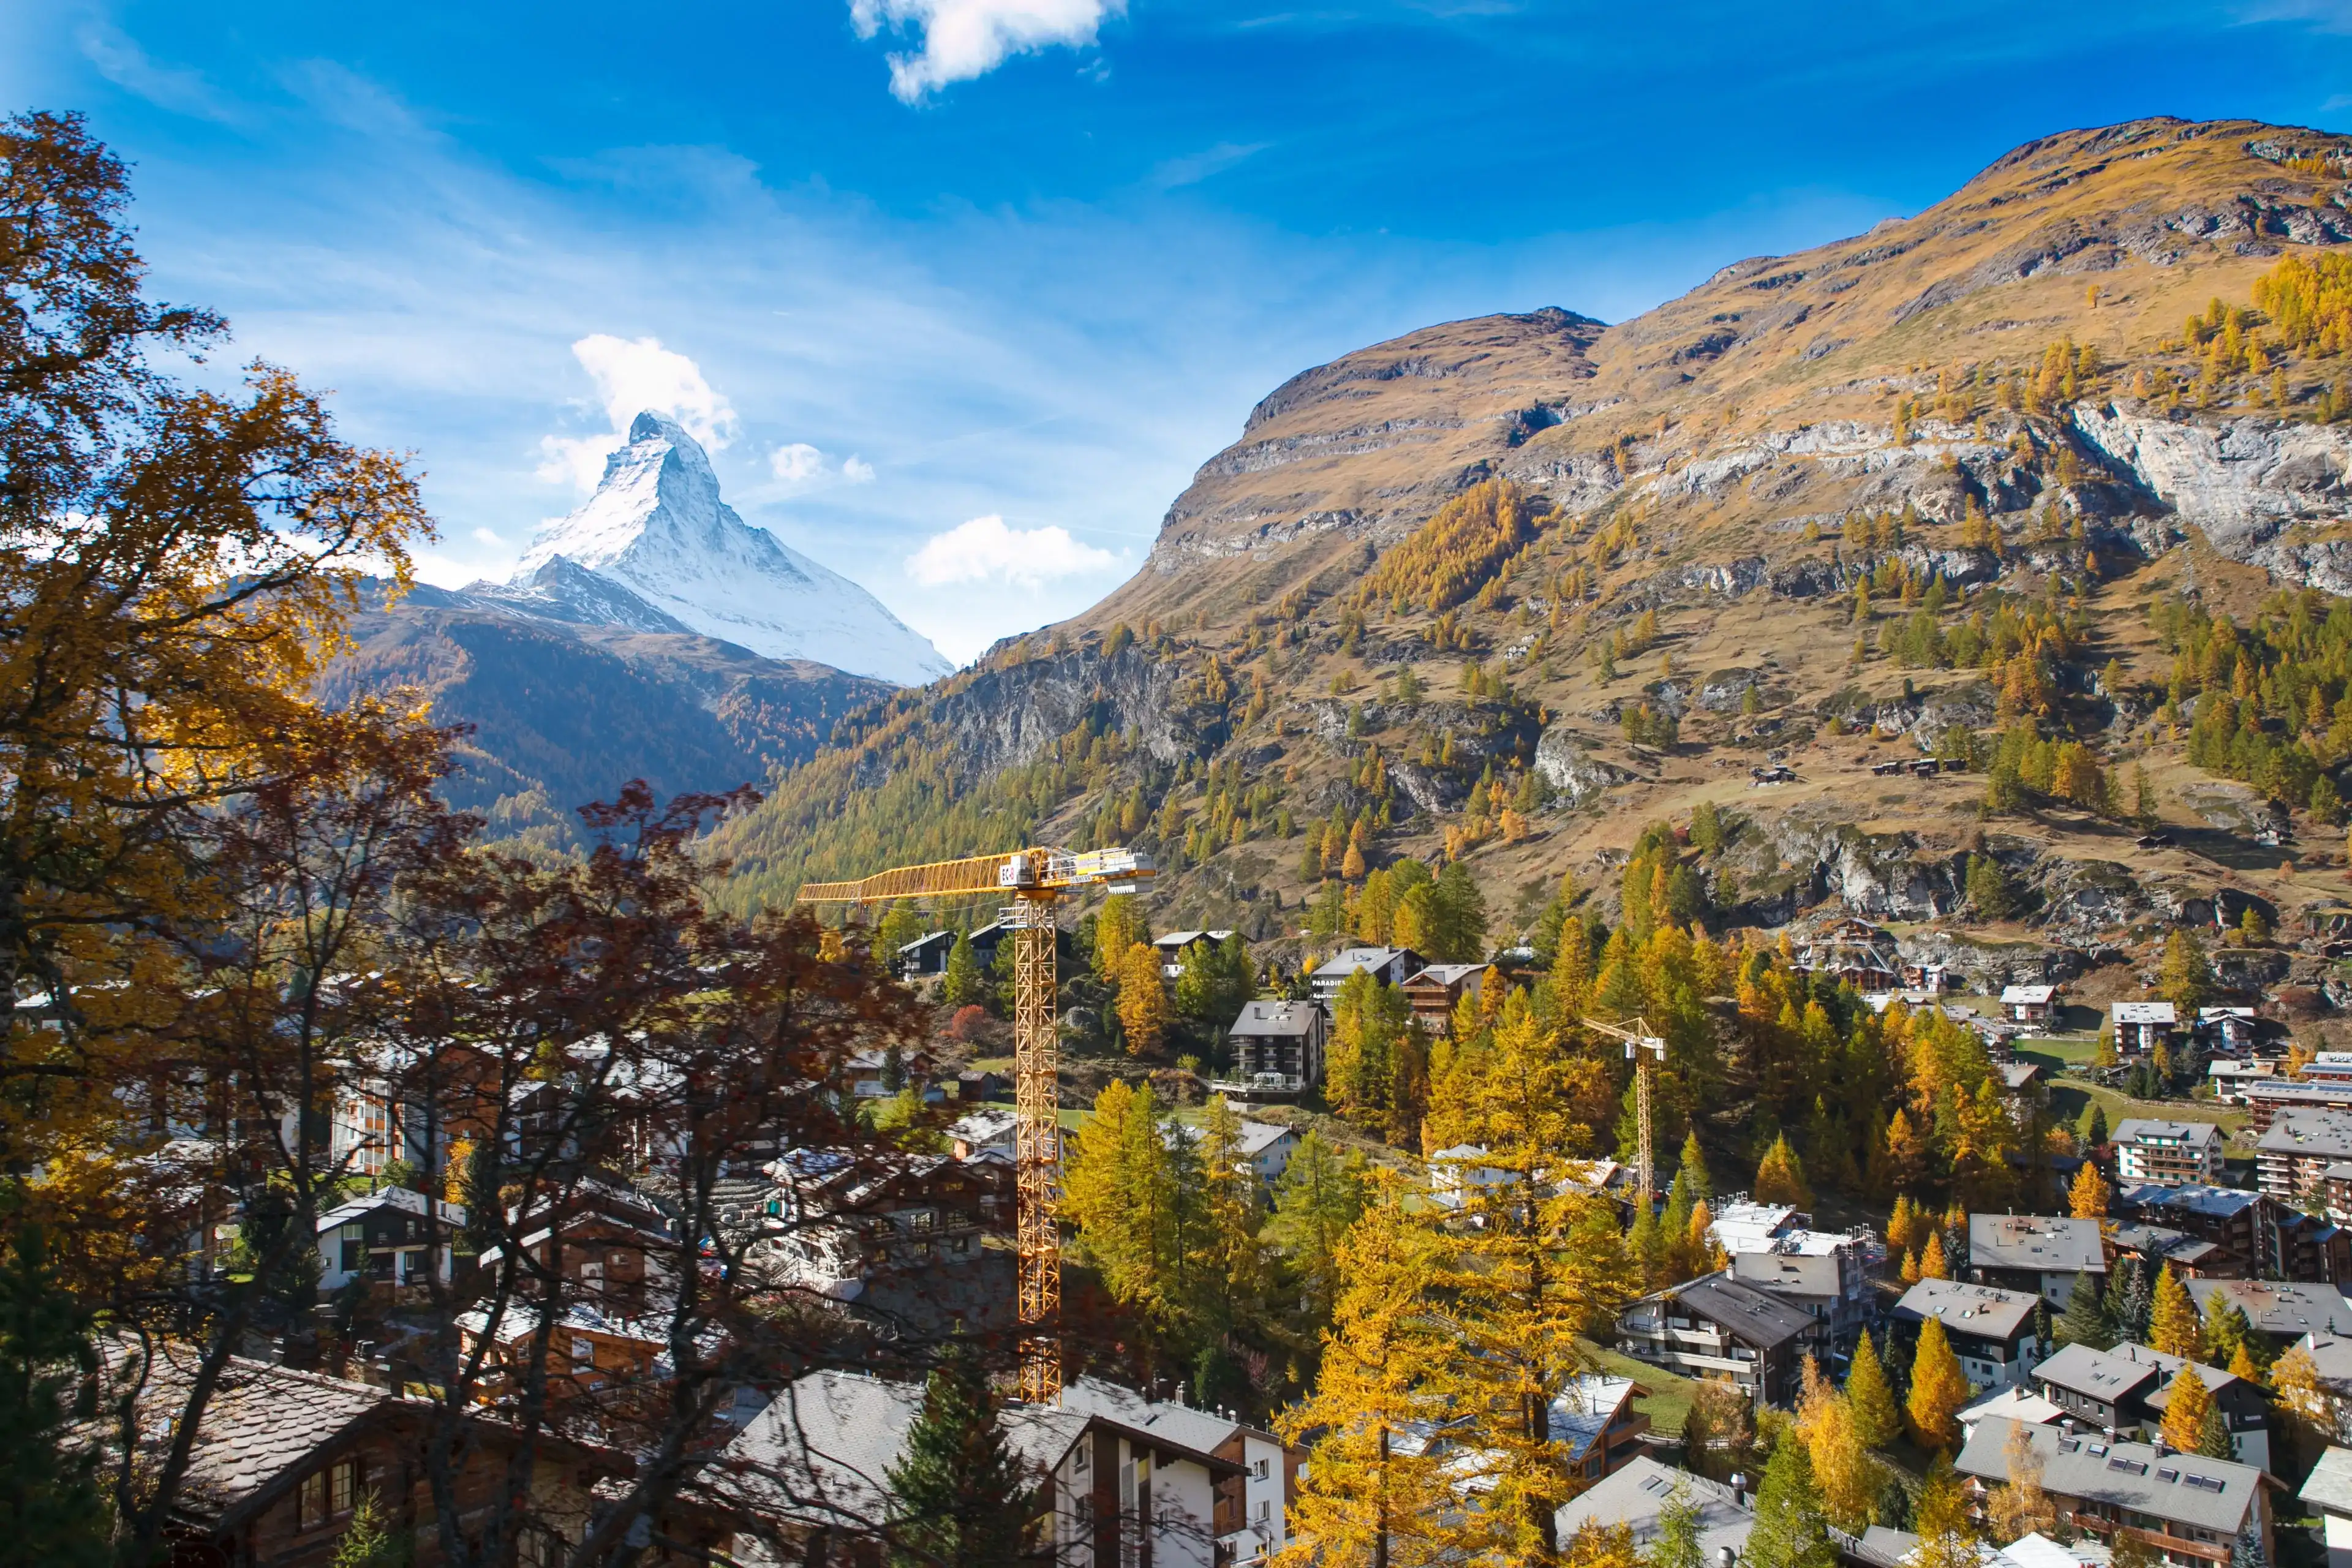 Best Zermatt hotels. Cheap hotels in Zermatt, Switzerland